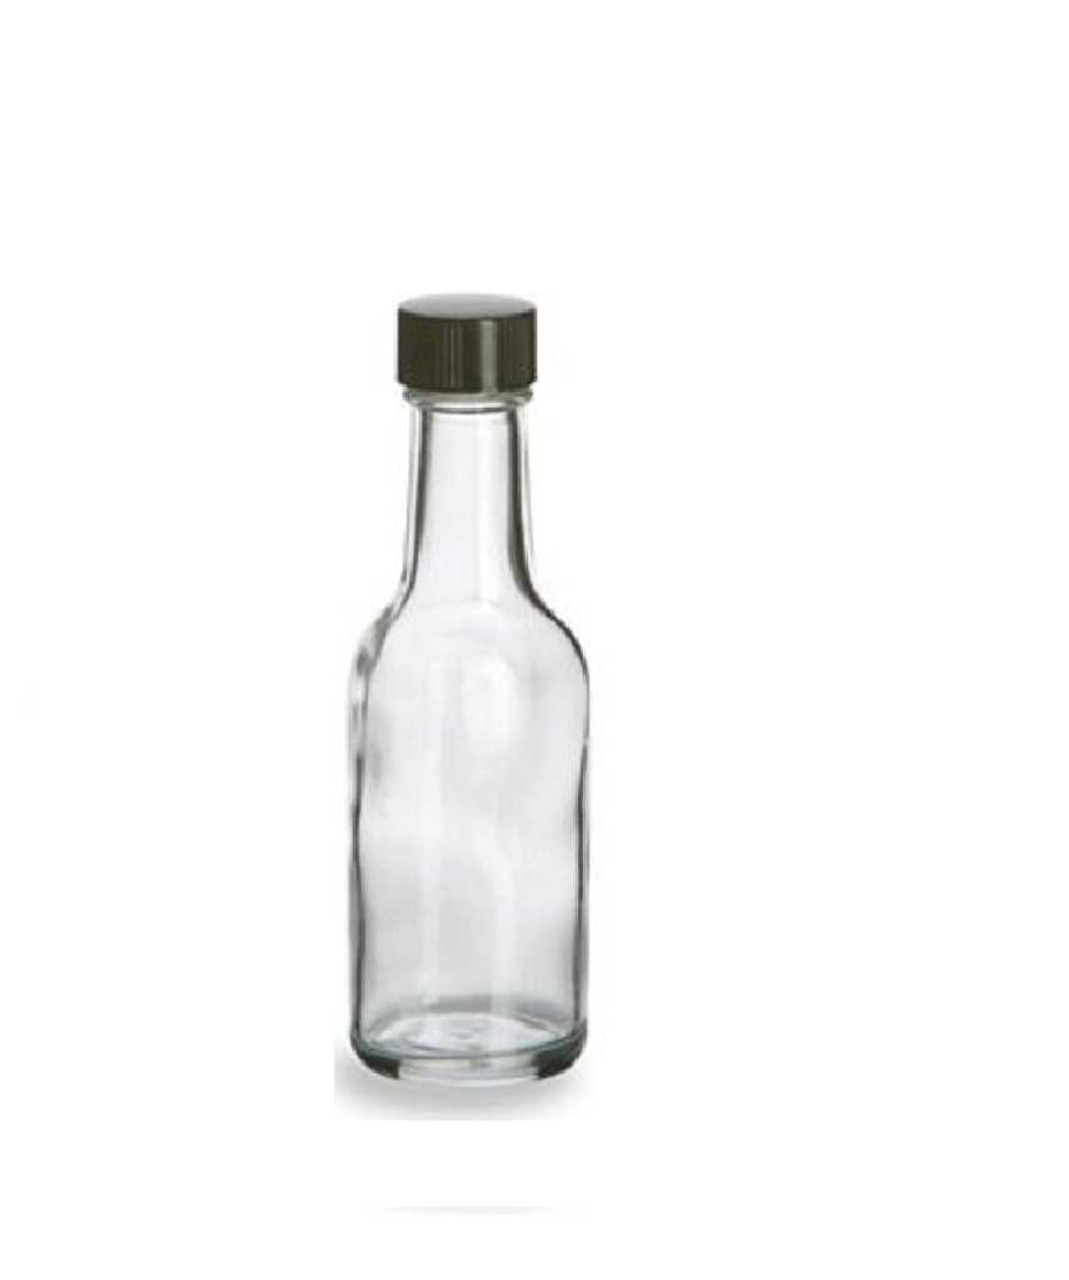 Commercial Mini Liquor 50ml Bottle Clear Display Case On Sale